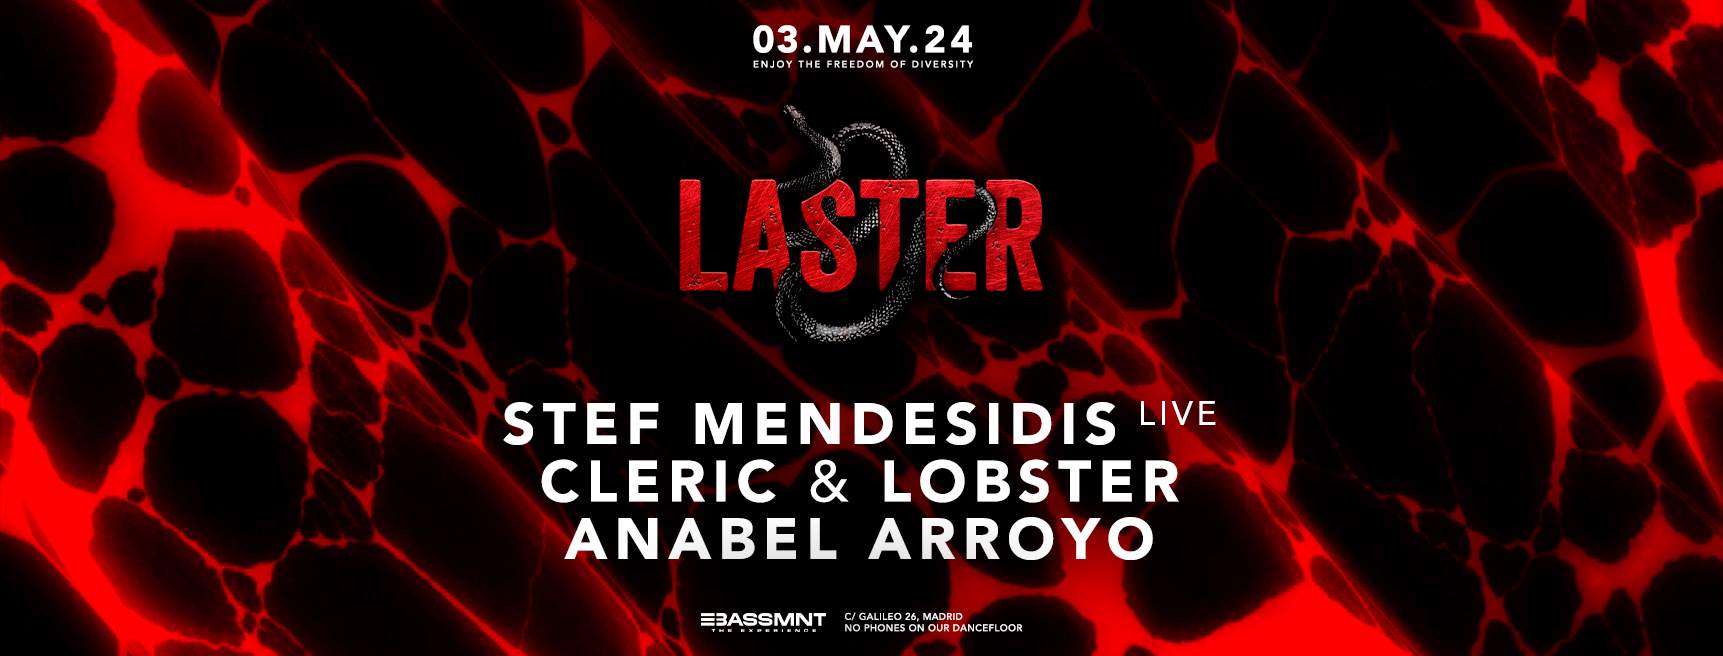 Laster Club vol. LI - Stef Mendesidis LIVE, Cleric & Lobster, Anabel Arroyo - フライヤー表